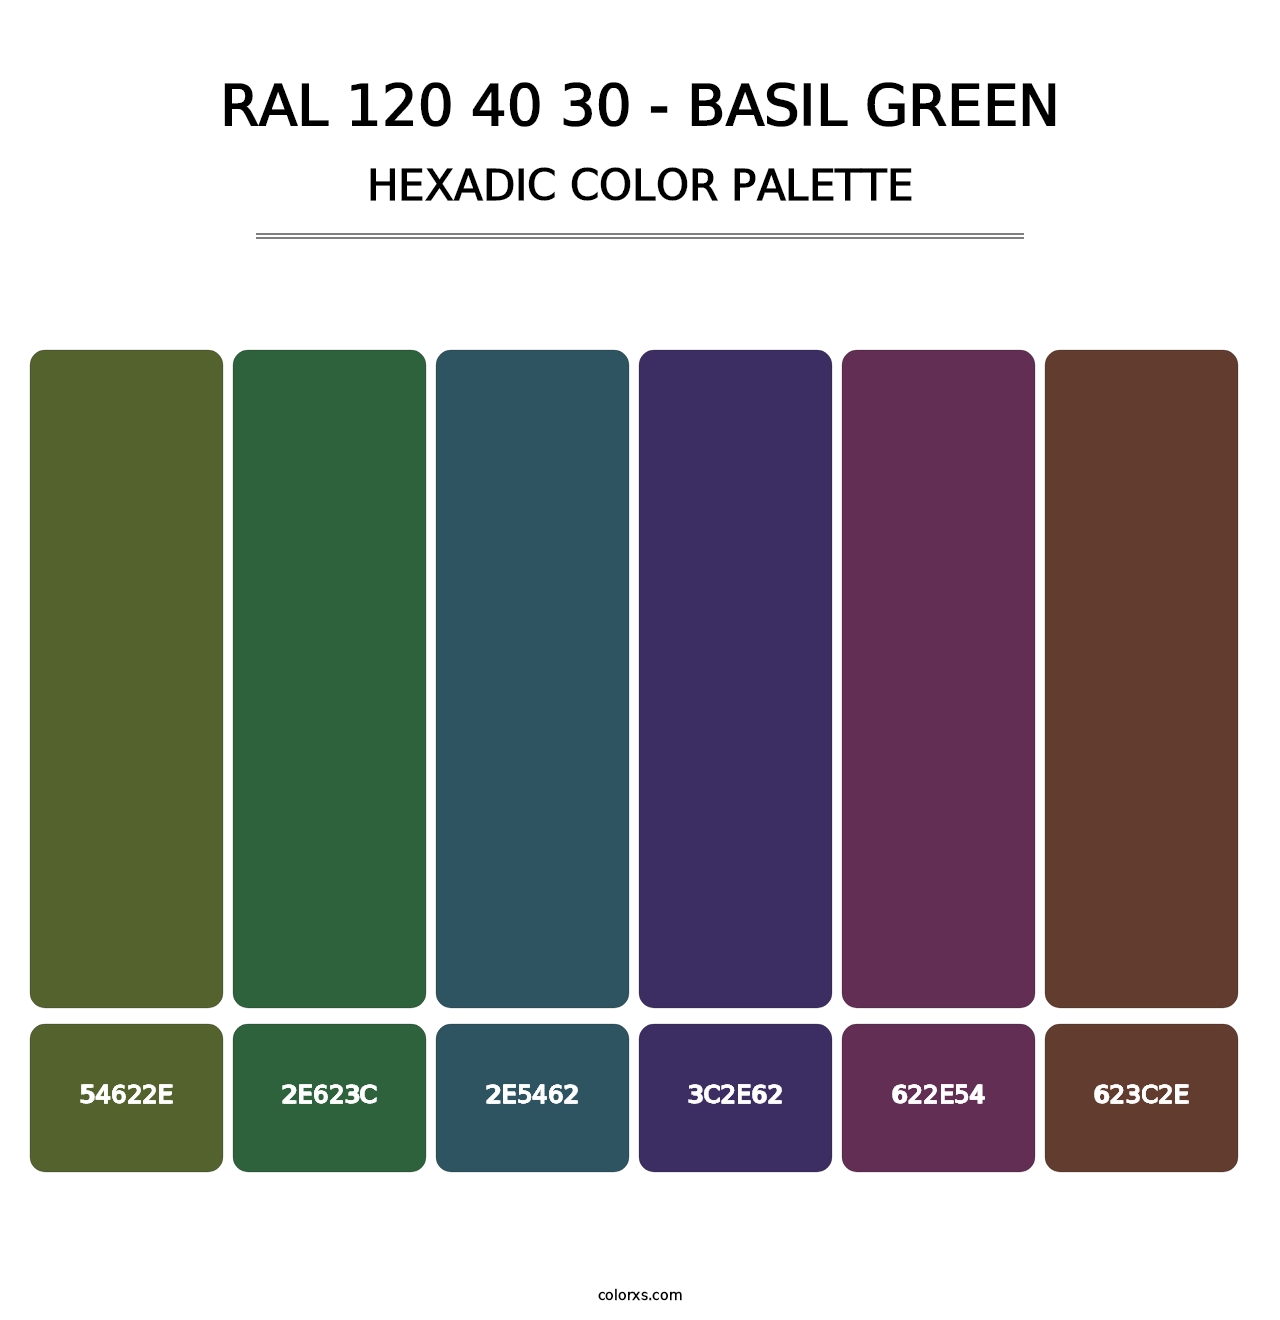 RAL 120 40 30 - Basil Green - Hexadic Color Palette